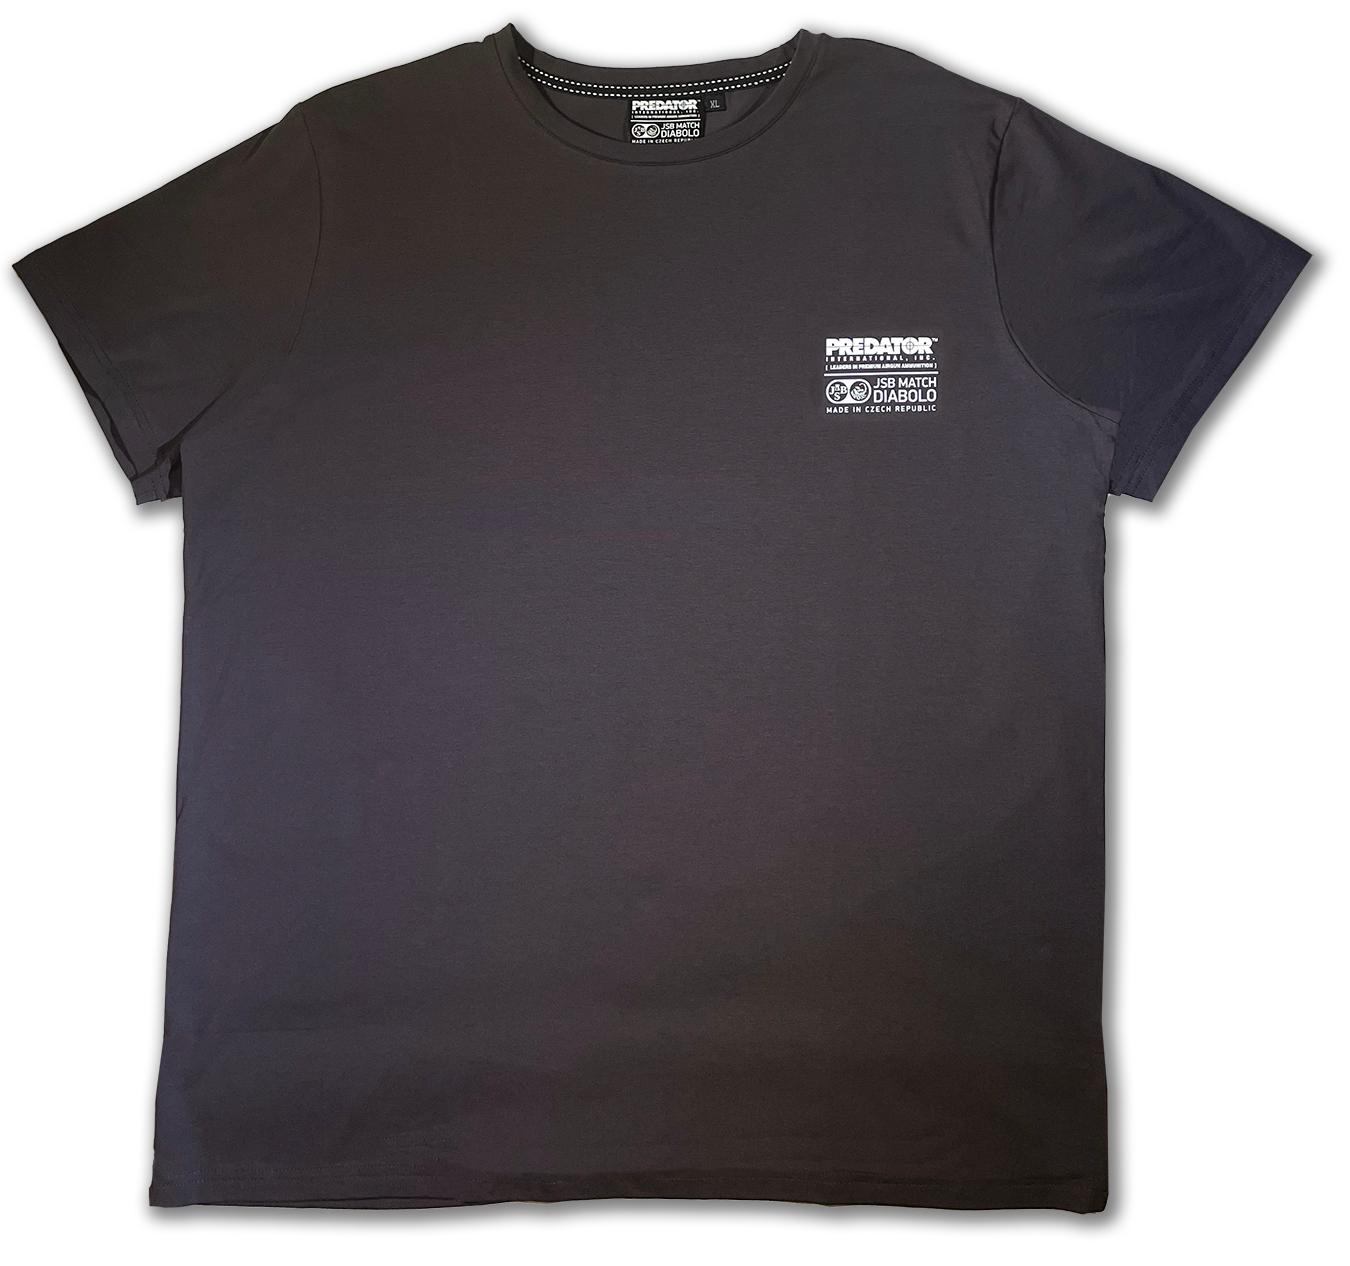 JSB Predator Short Sleeve Cotton/Spandex T-Shirt, Grey, Medium